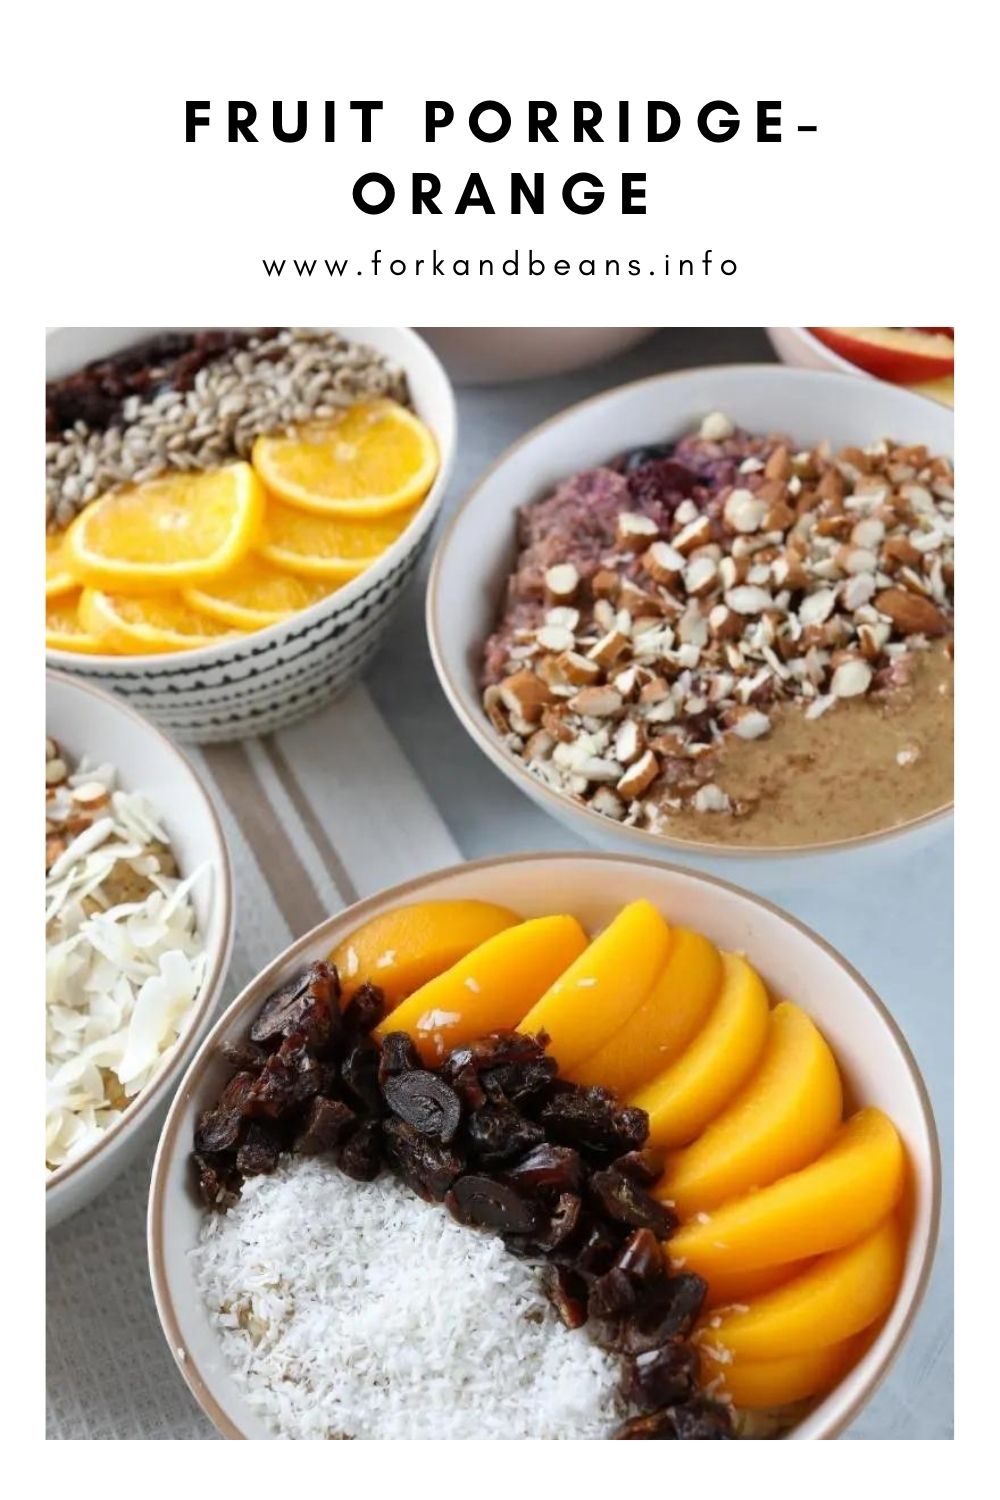 10 Healthy Porridge Recipes (Oatmeal Ideas Just for You)